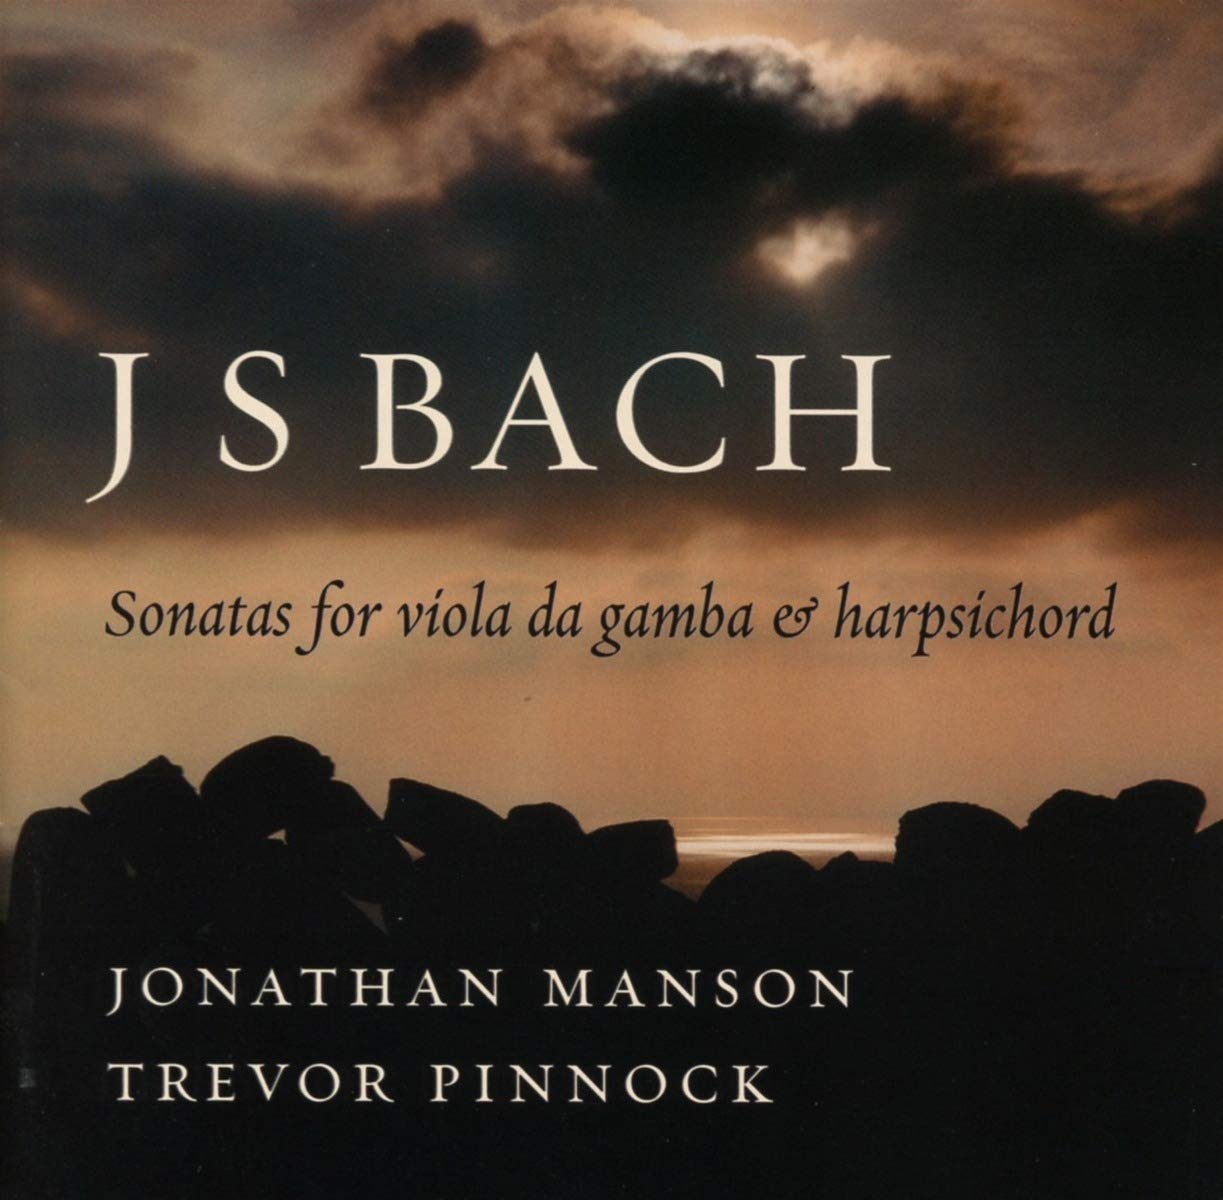 Bach: Sonatas for Viola da Gamba - Trevor Pinnock, Jonathan Manson